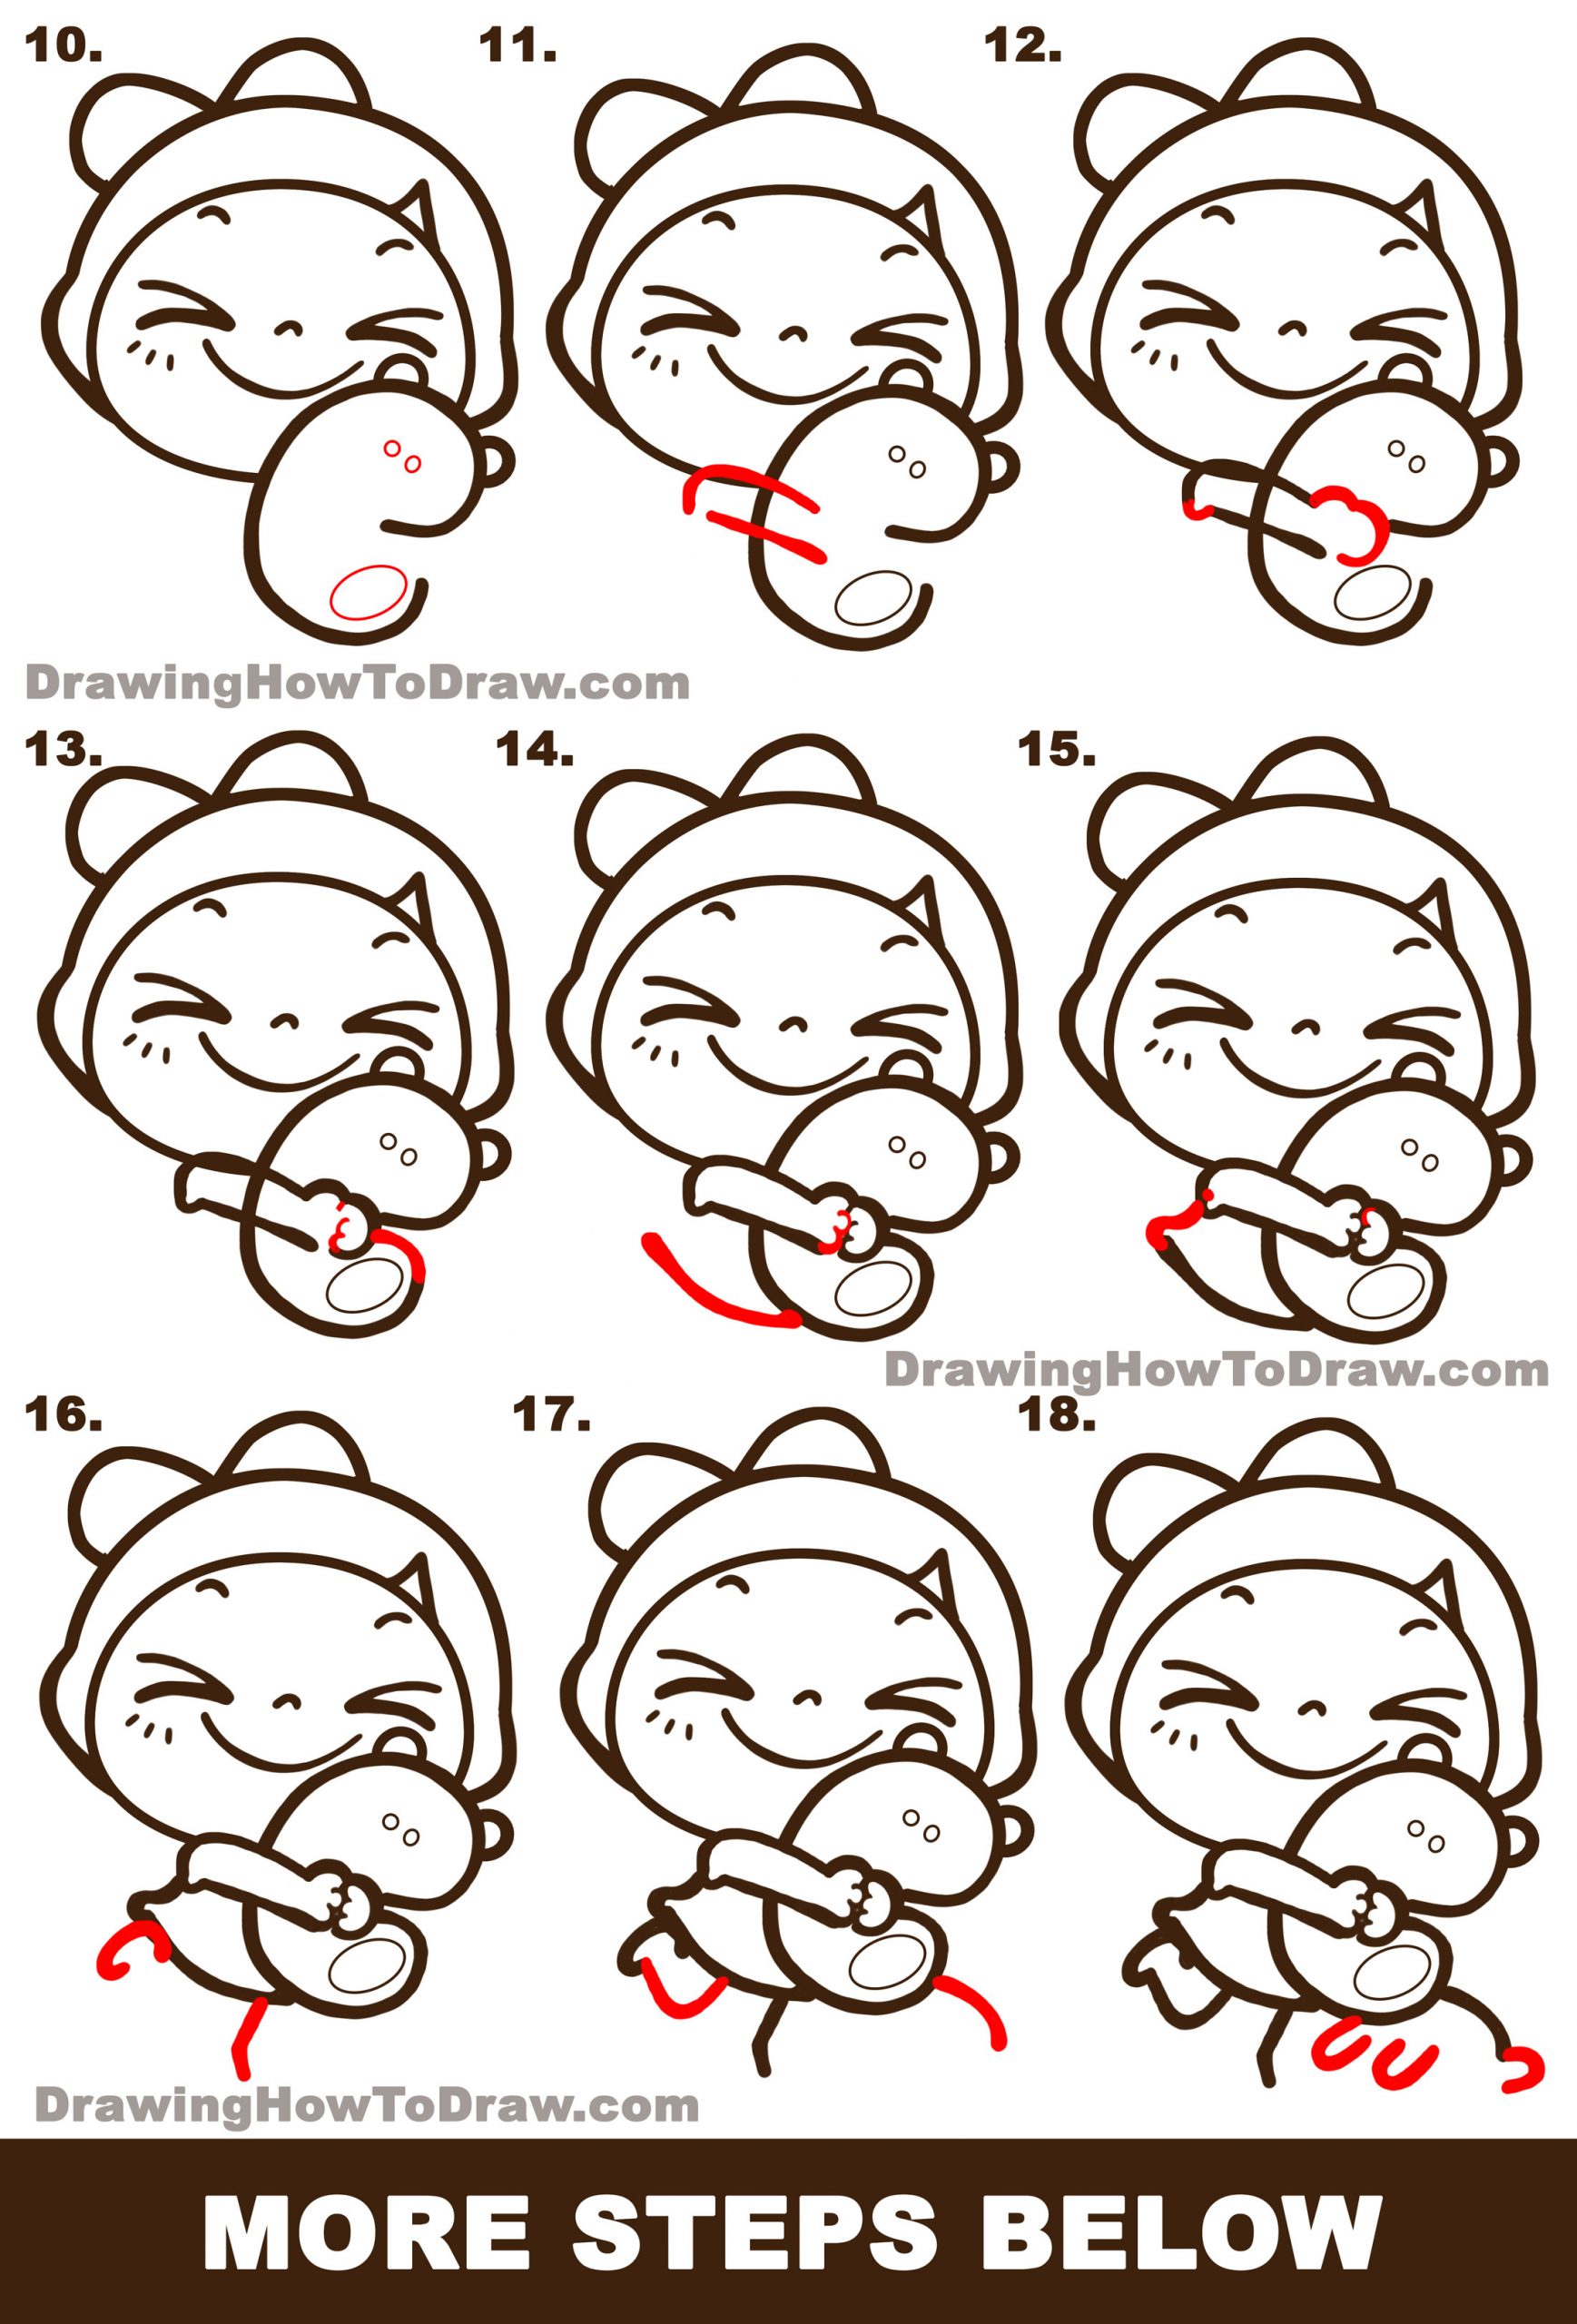 How to Draw Lemon & Sugar Cute little cartoon girl hugging dog step by step drawing tutorial